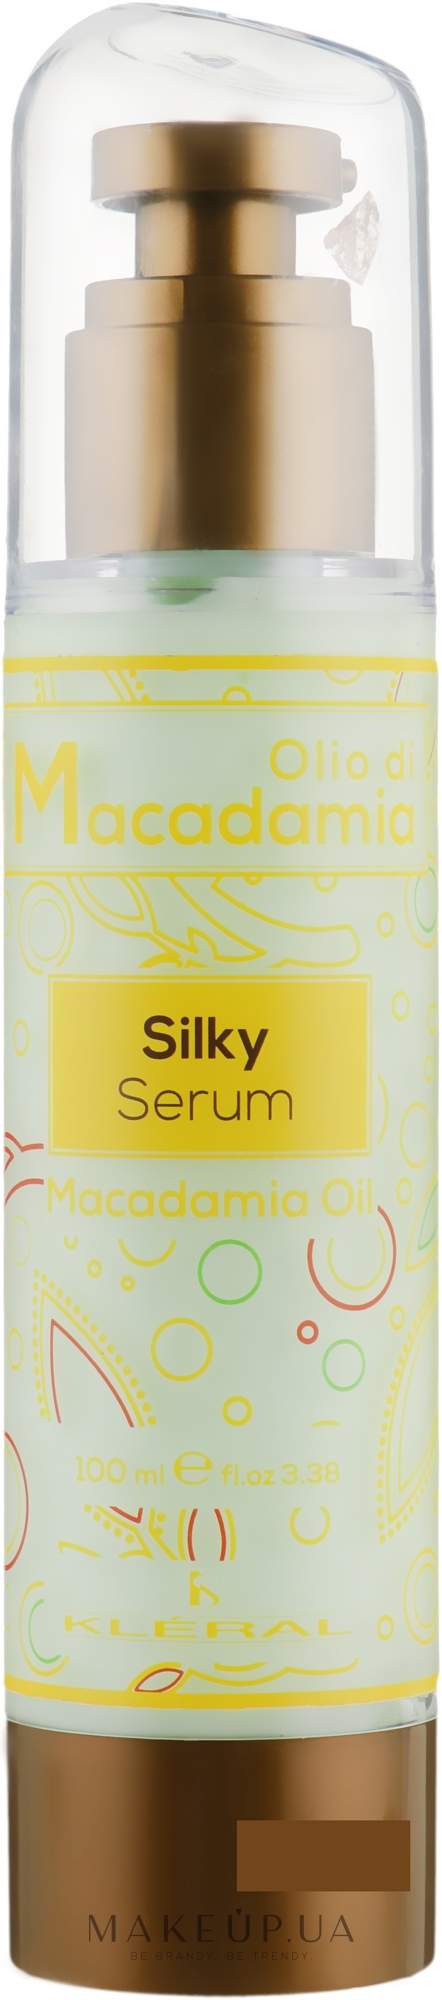 Флюїд-шовк з маслом макадамії - Kleral System Olio Di Macadamia Silky Serum — фото 100ml